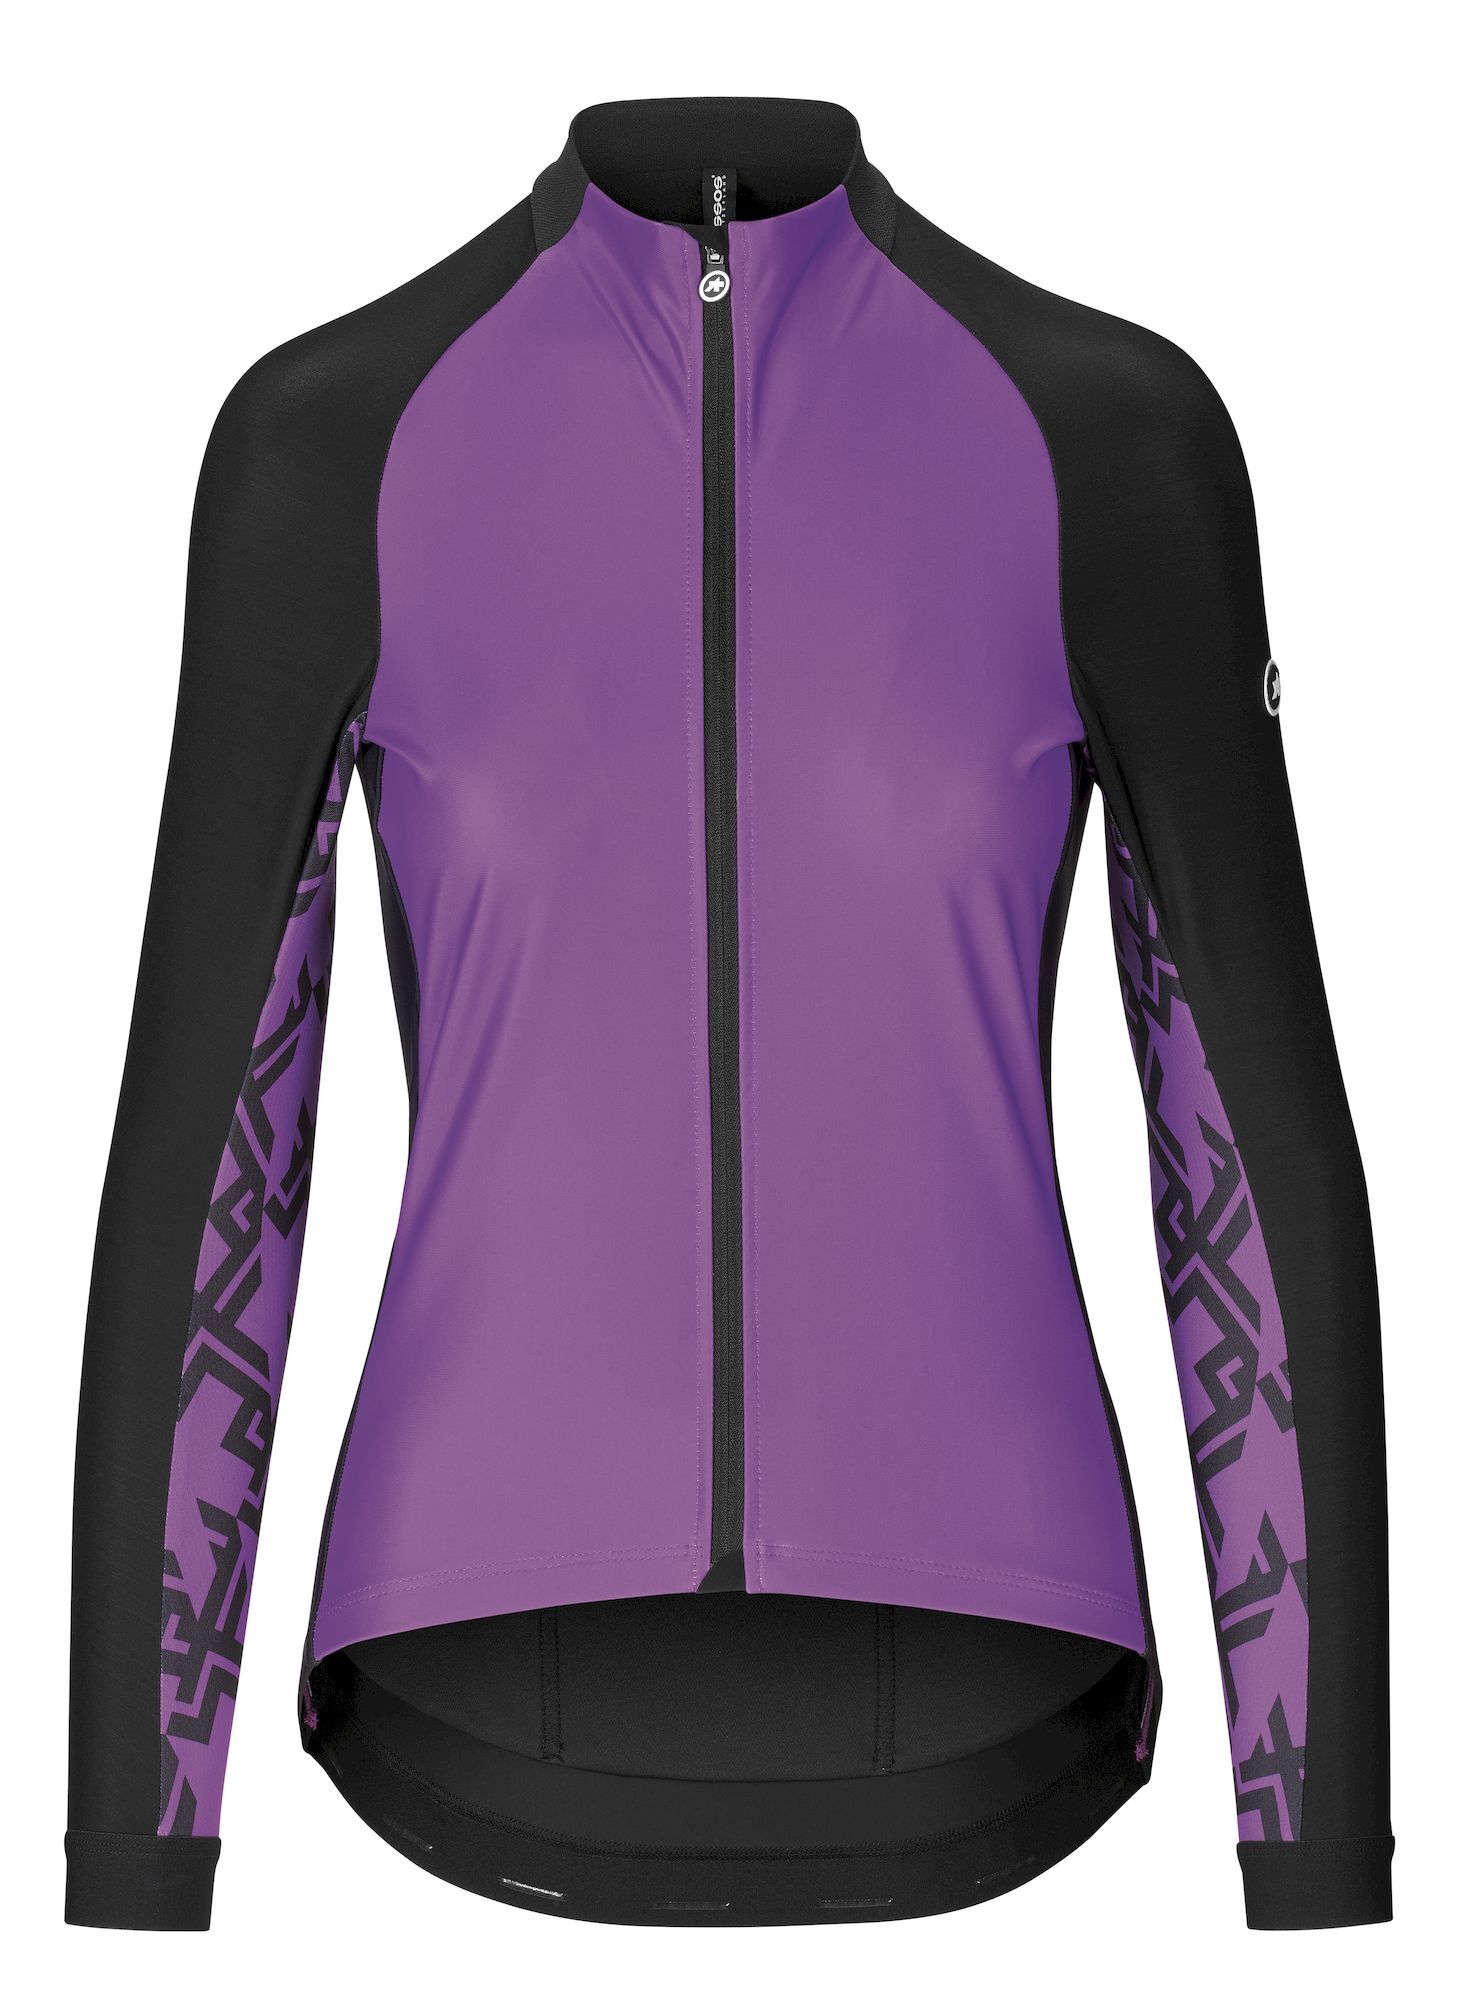 Assos Uma GT Spring Fall Jacket - Cycling jacket - Women's